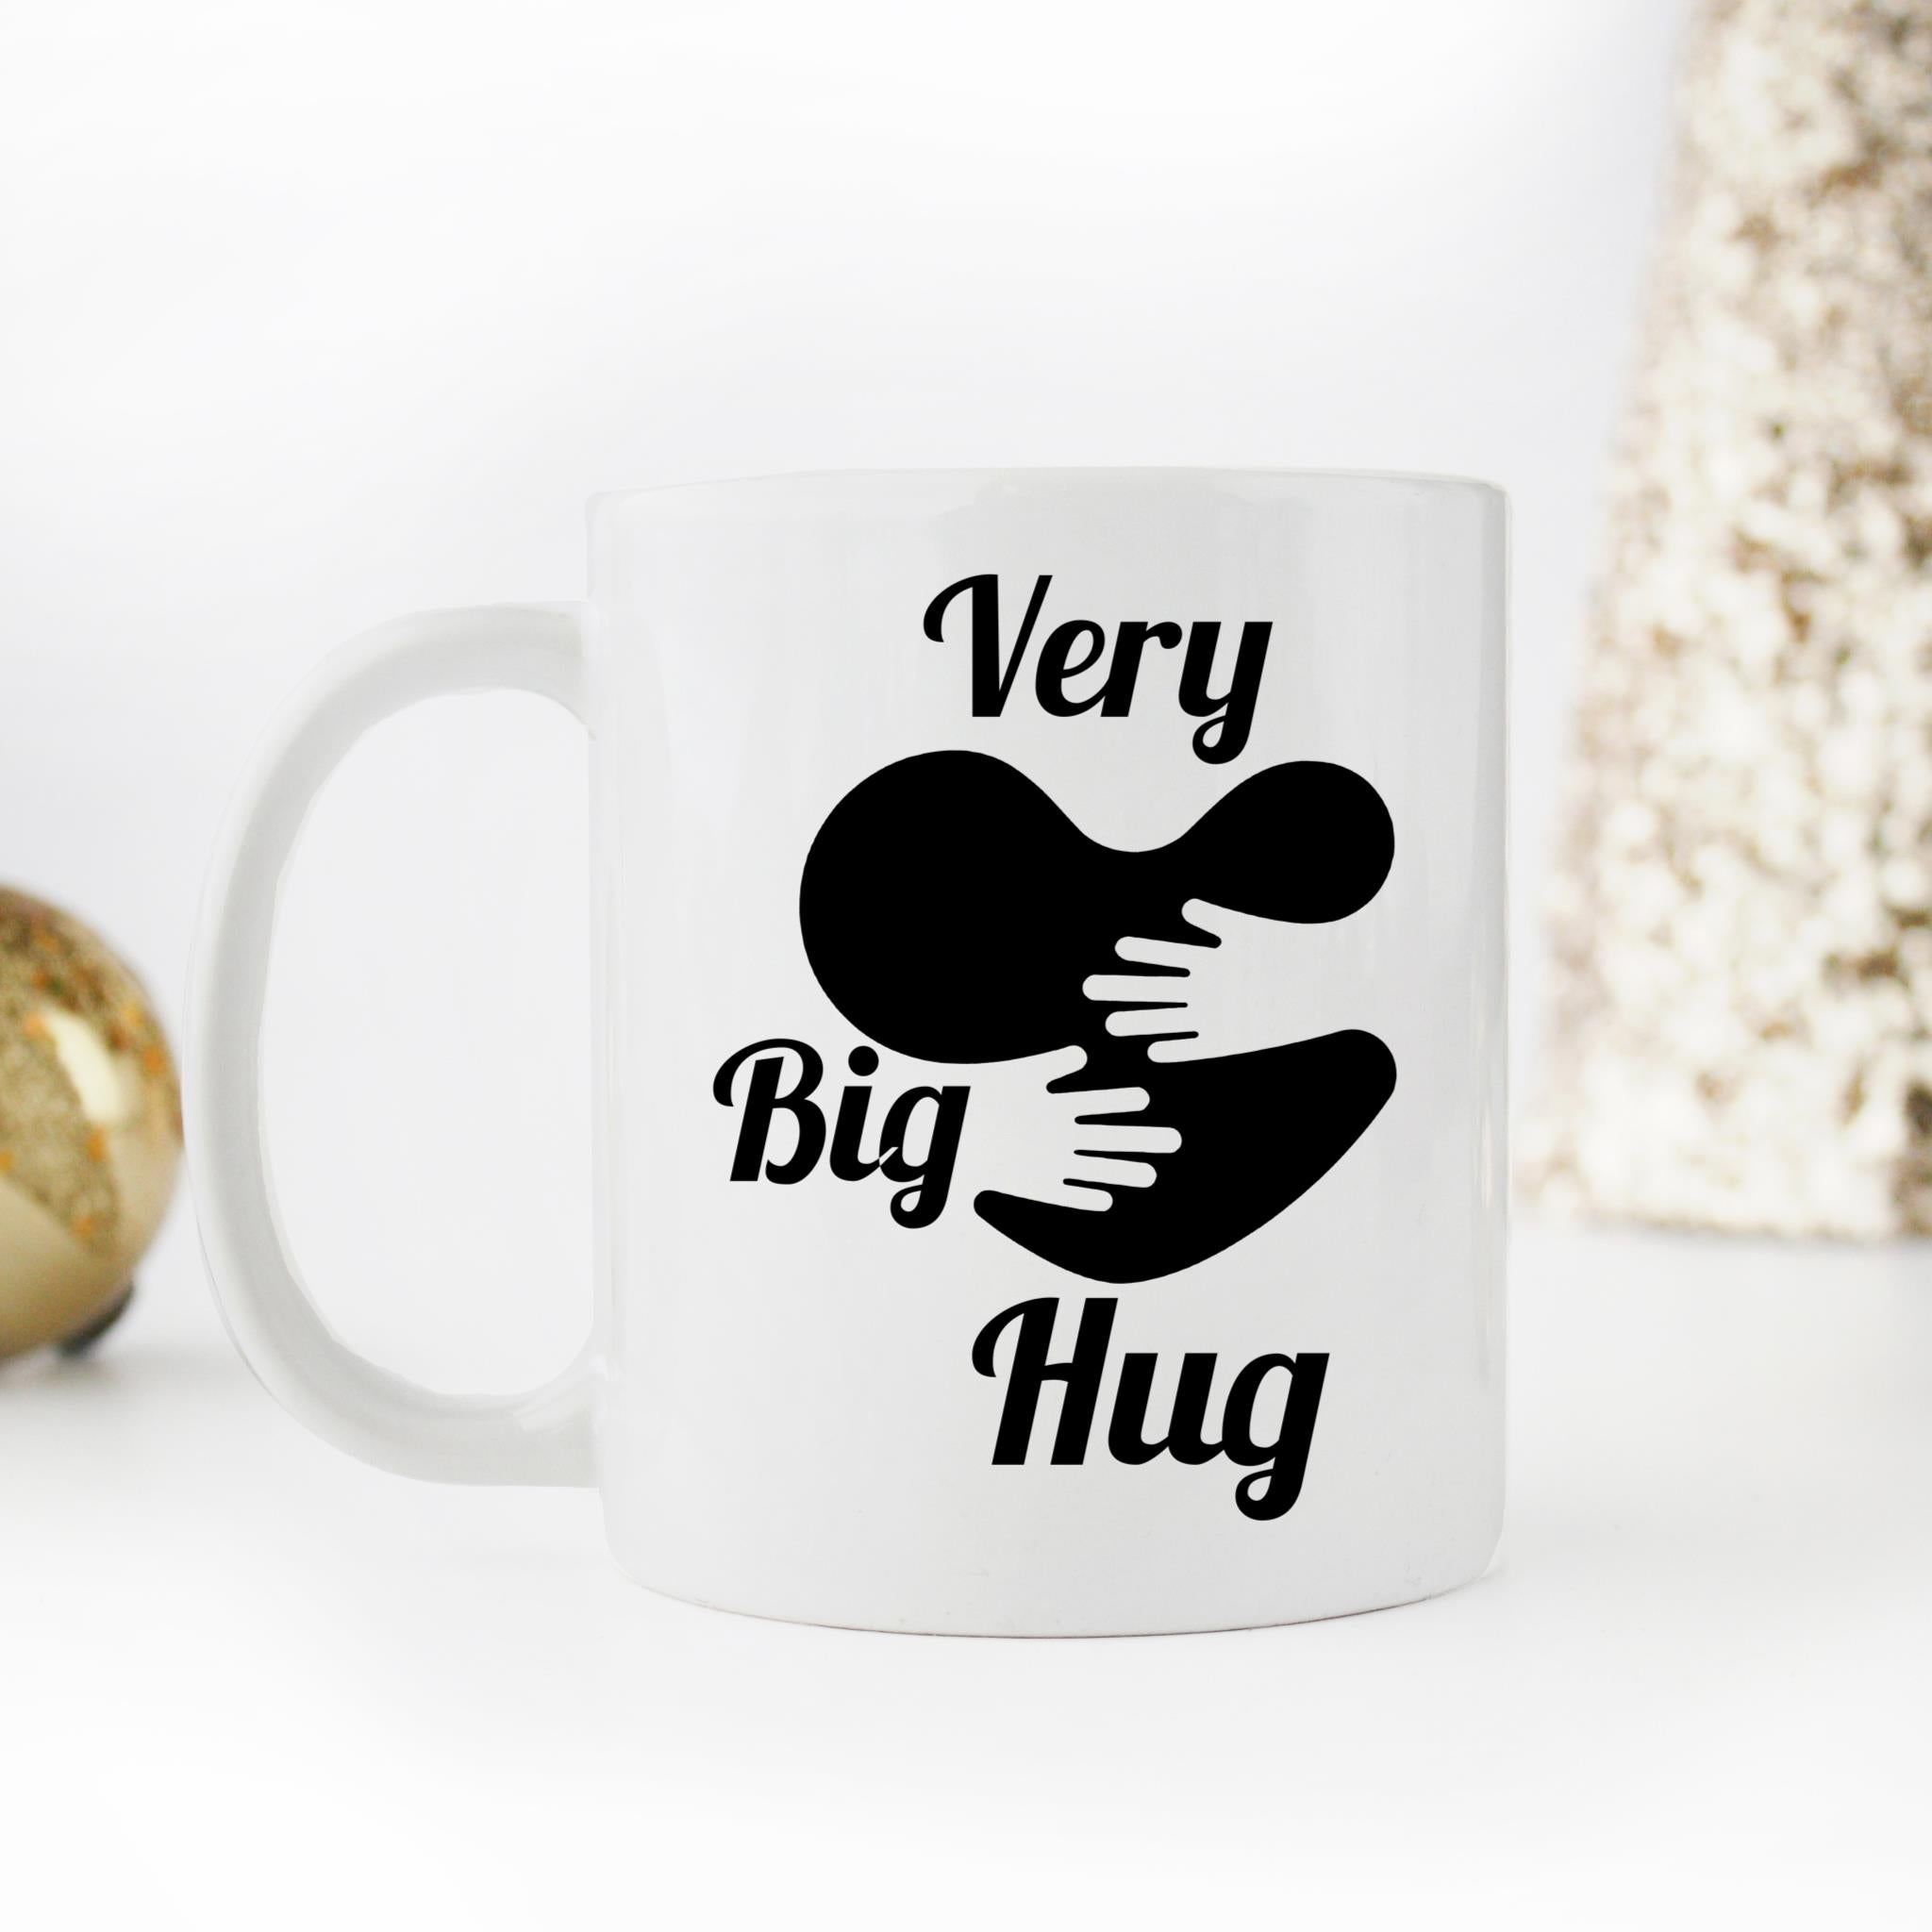 Funny Mug, Large Coffee Mug, Large Mug, Large Mugs, Novelty, Funny